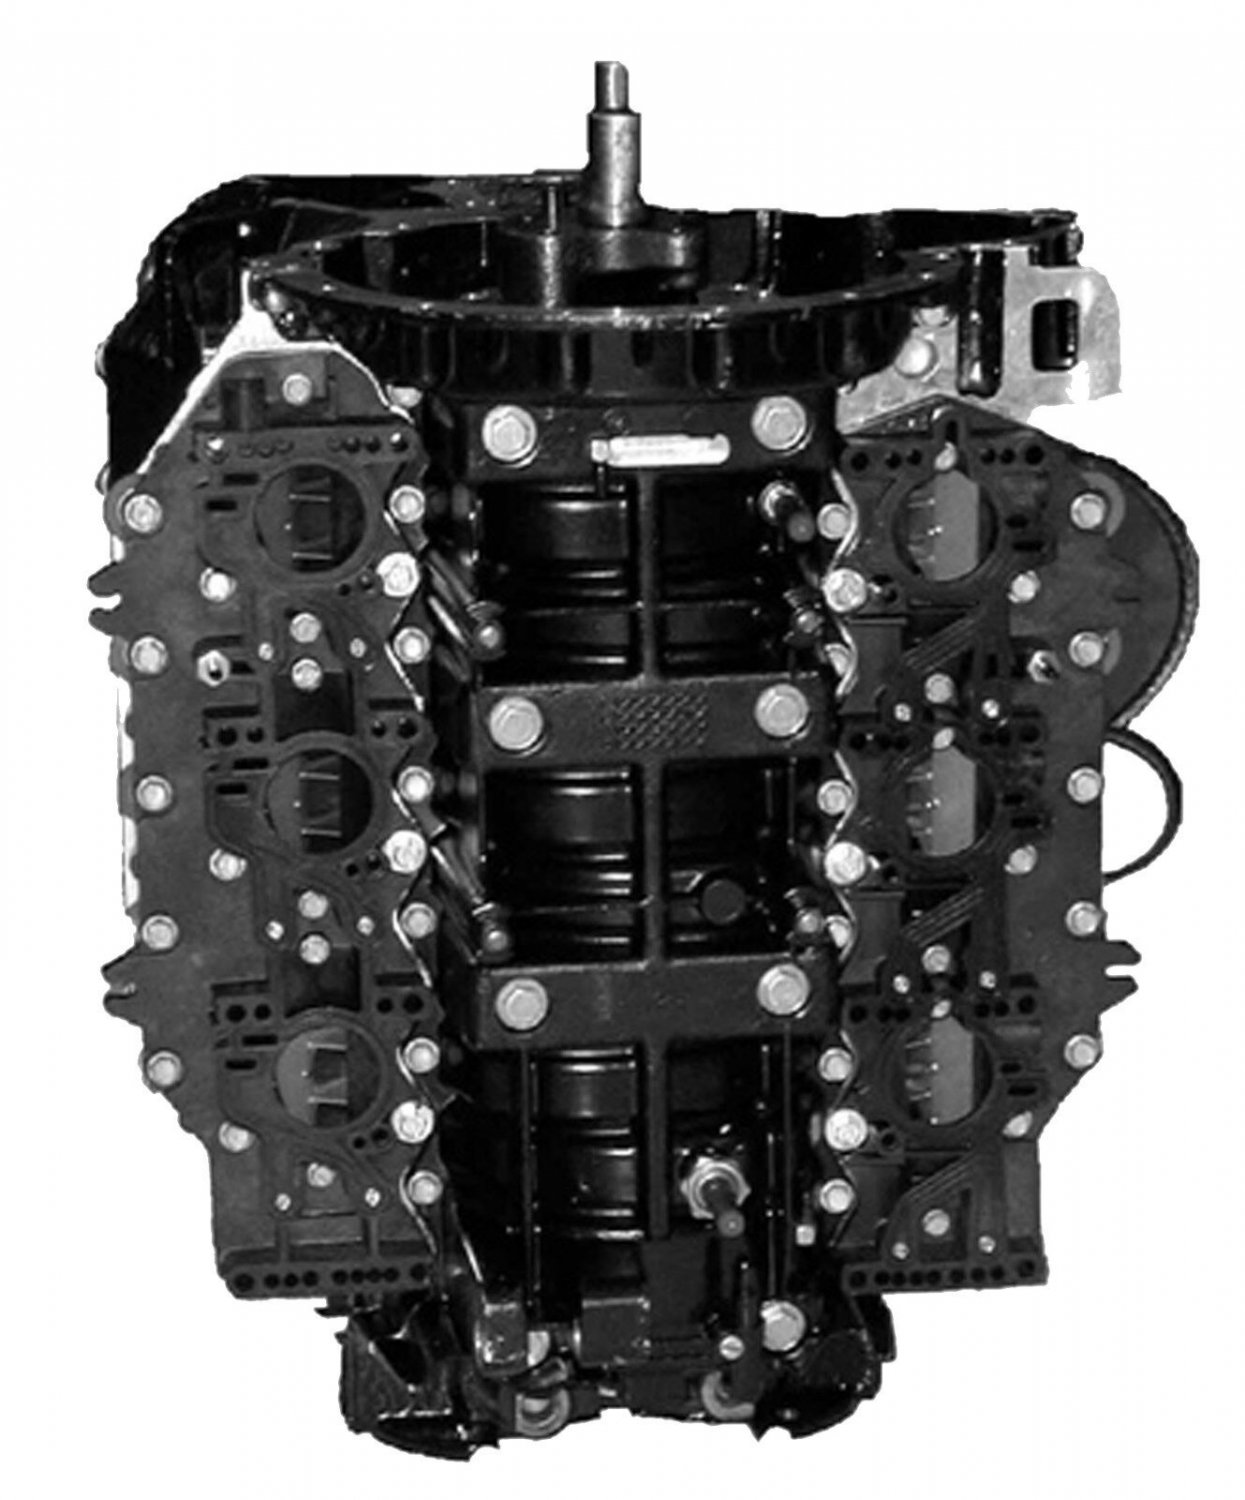 Johnson 150, 175 Hp. Engine Power Head 60 degree Carbureted 1997-2000